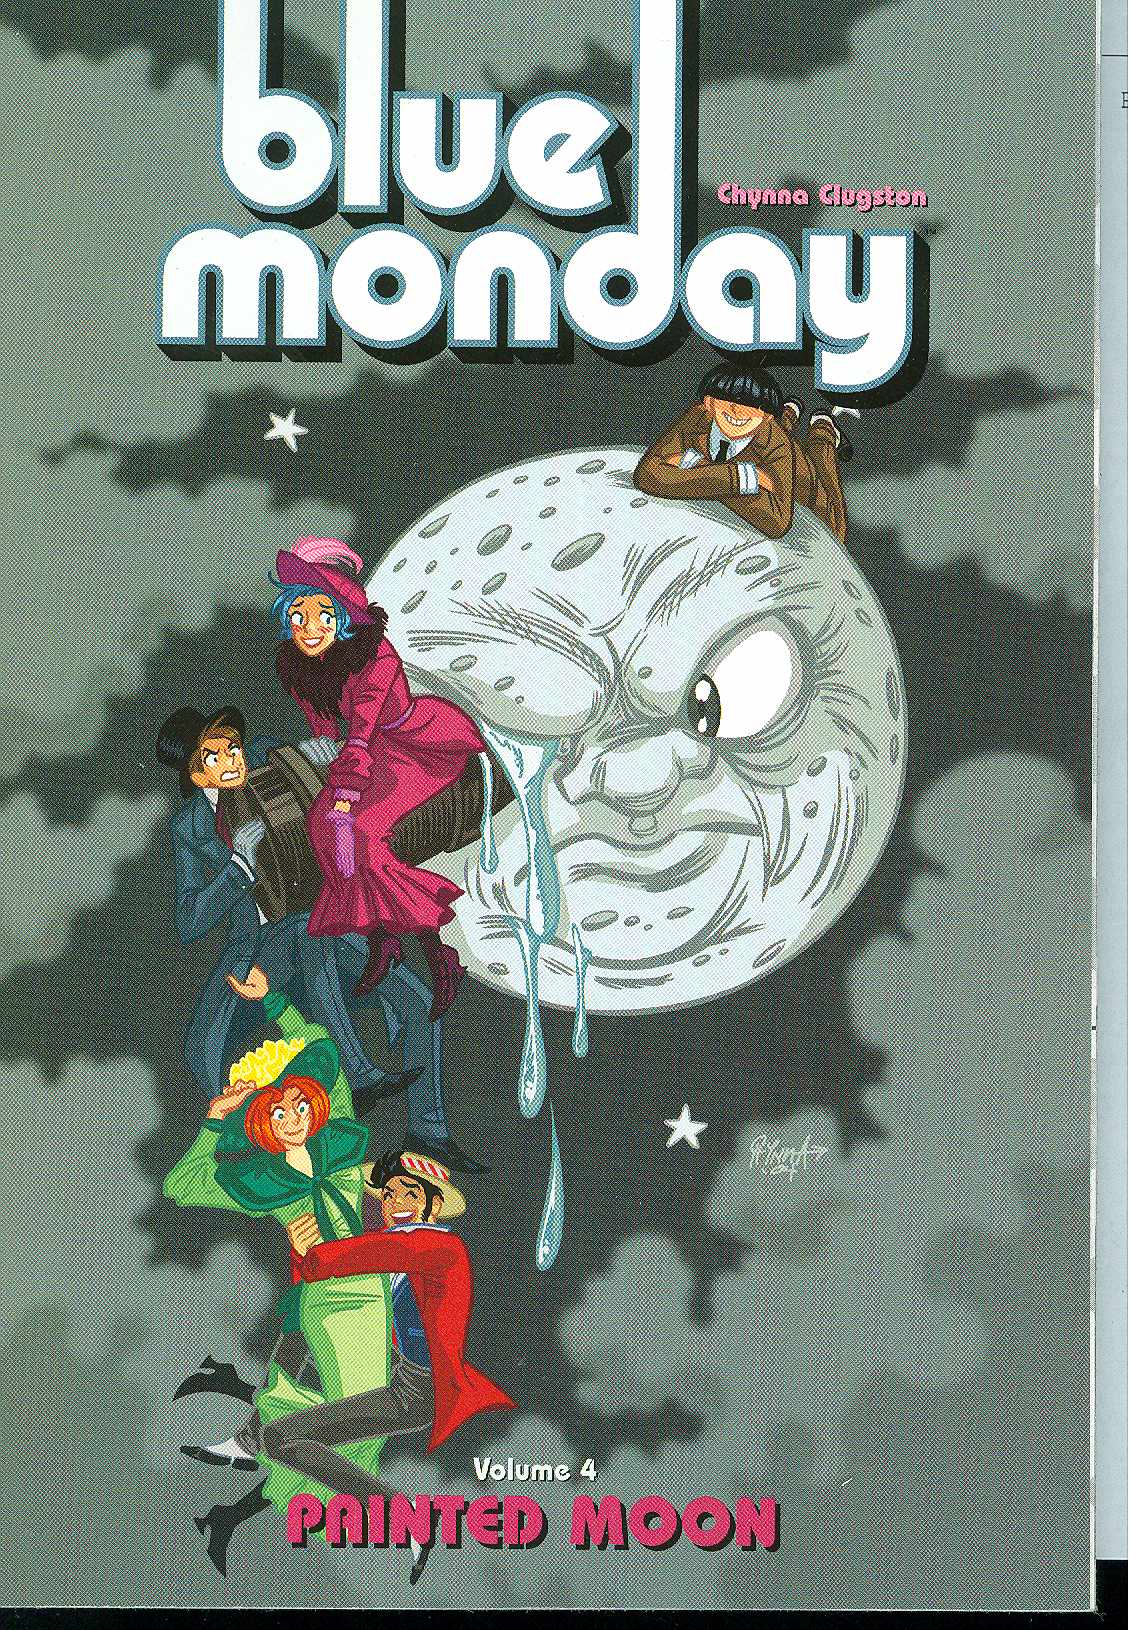 Blue Monday Graphic Novel Volume 4 Painted Moon